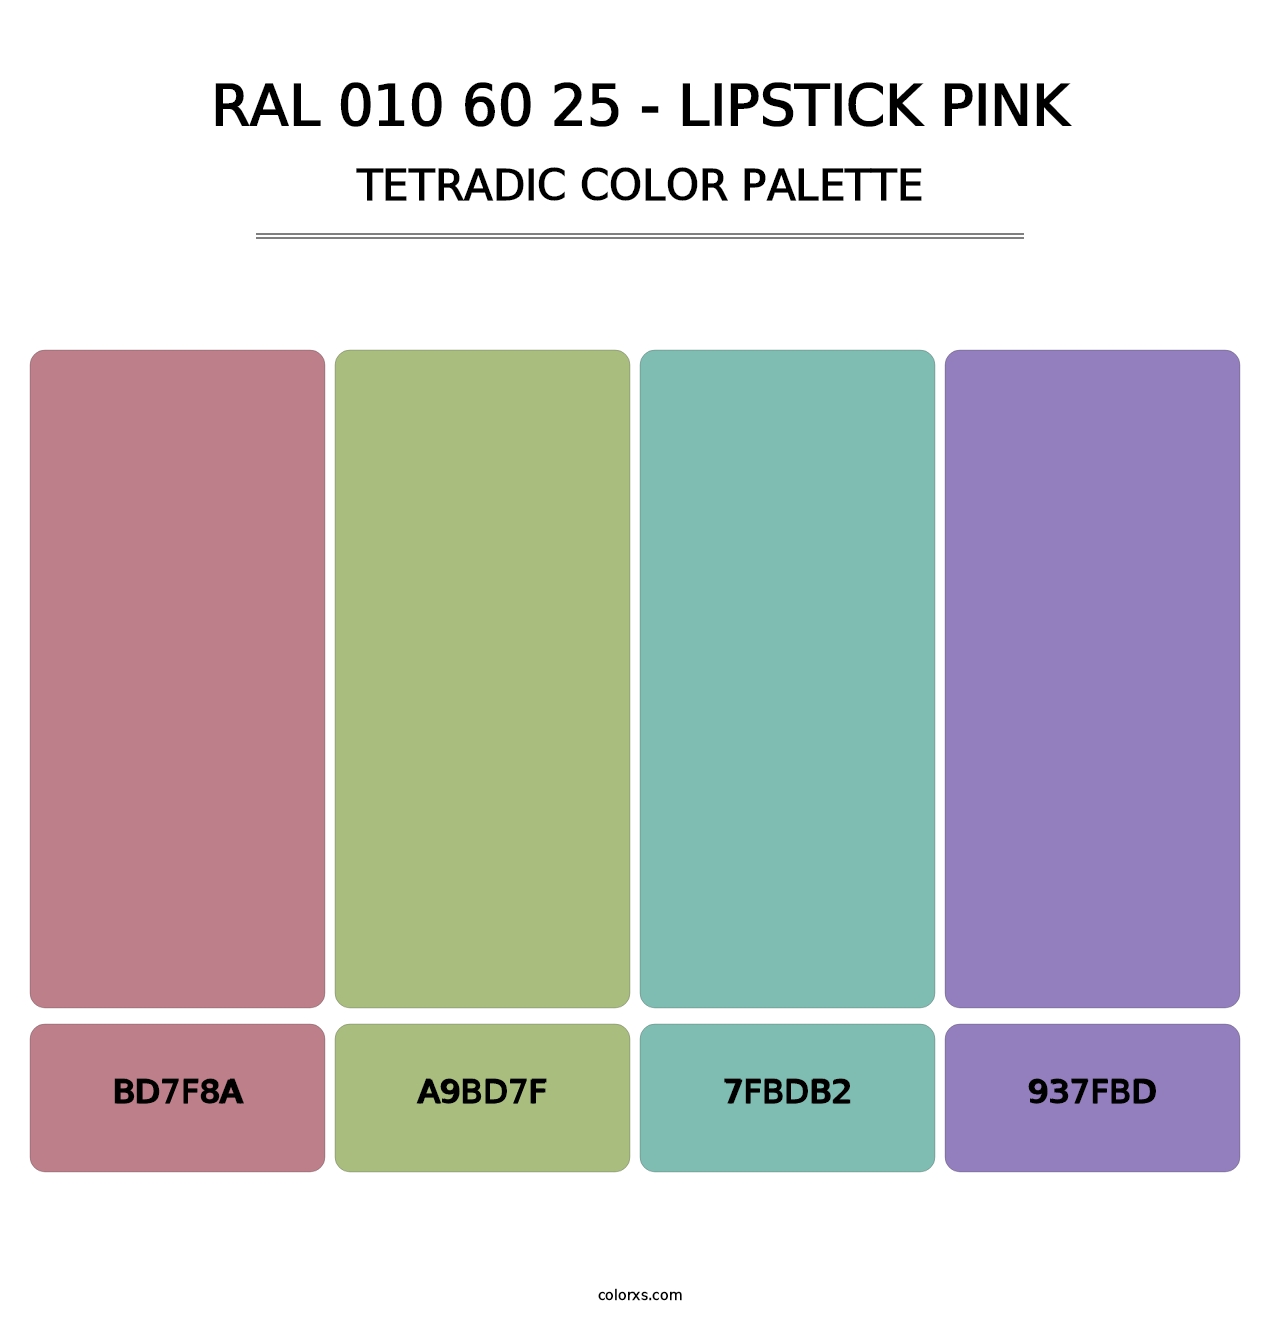 RAL 010 60 25 - Lipstick Pink - Tetradic Color Palette